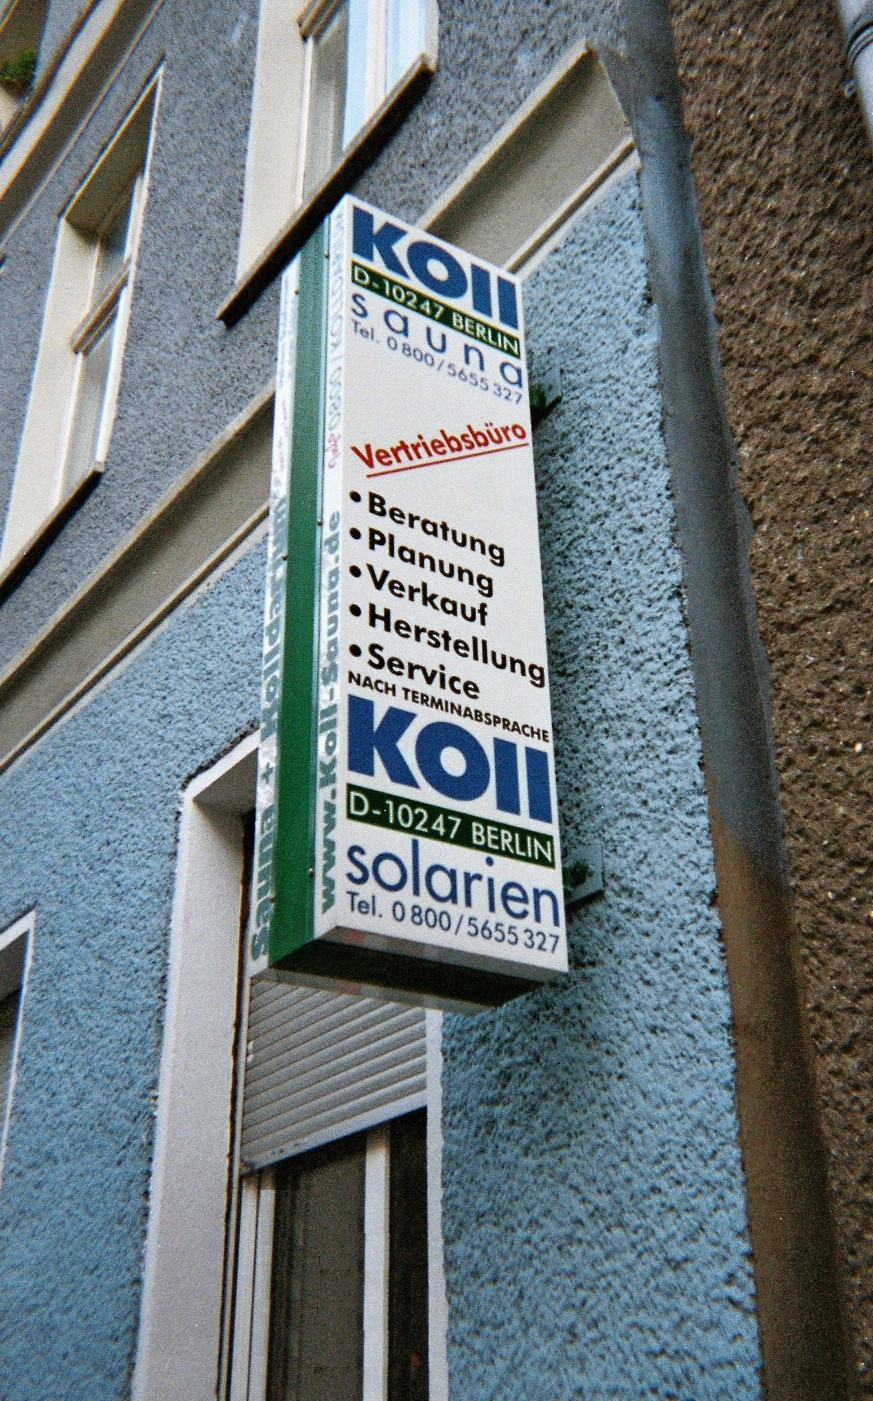 Koll Saunabau Saunahersteller Vertriebsbüro Berlin